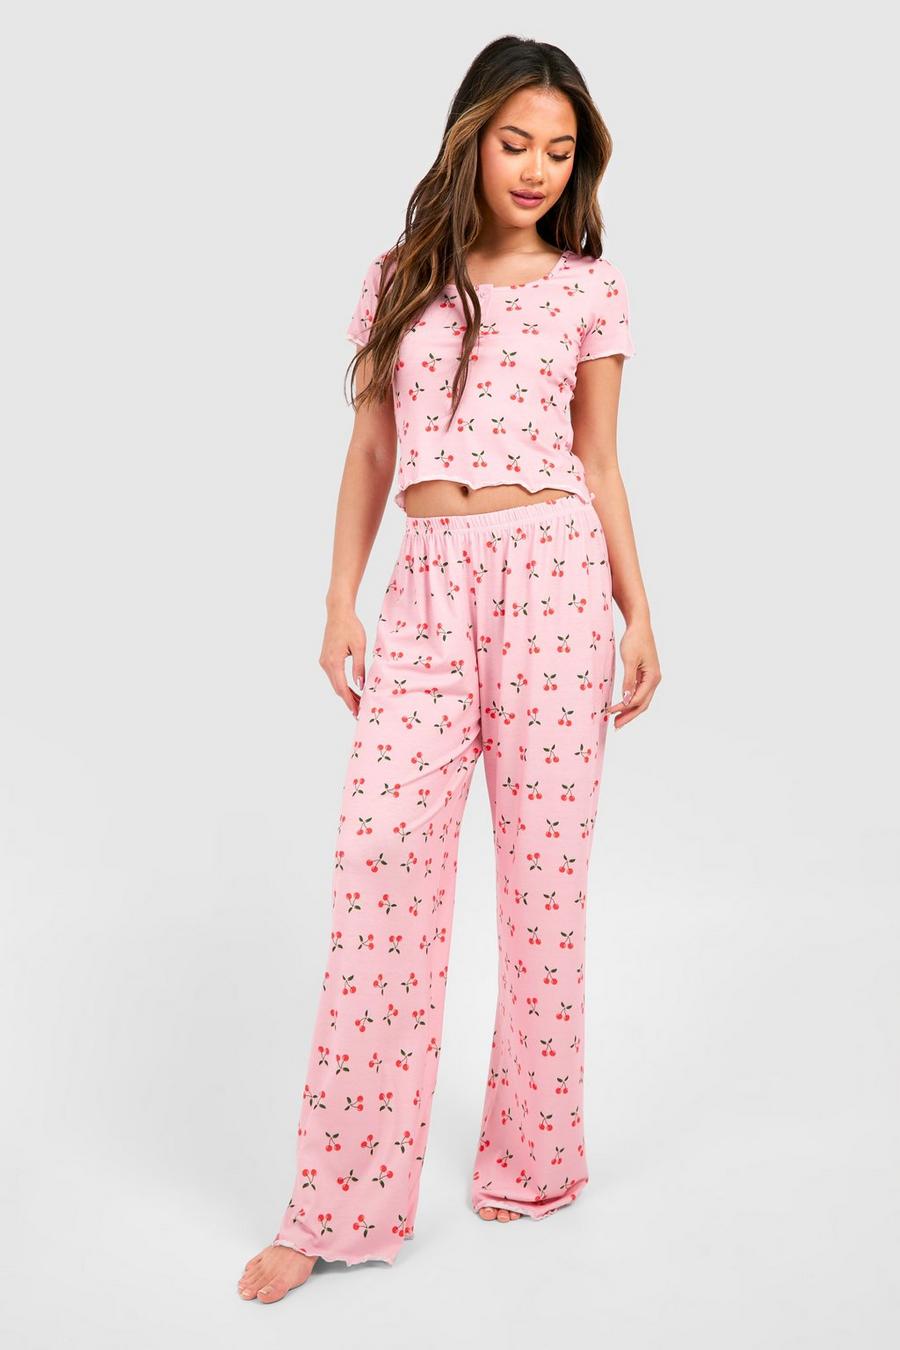 Pink Cherry Pj Pants Set